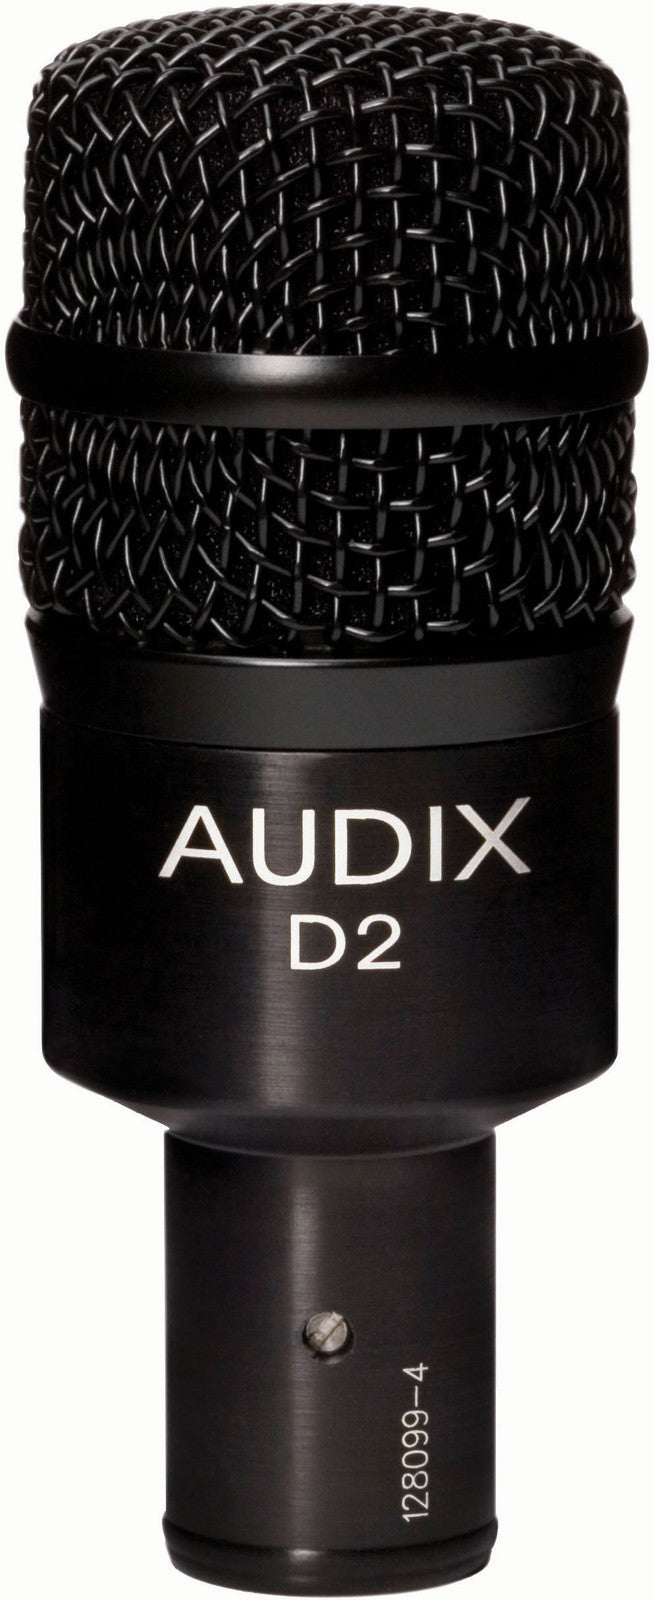 Recording Equipment - Audix - Audix D2 - Professional Audio Design, Inc